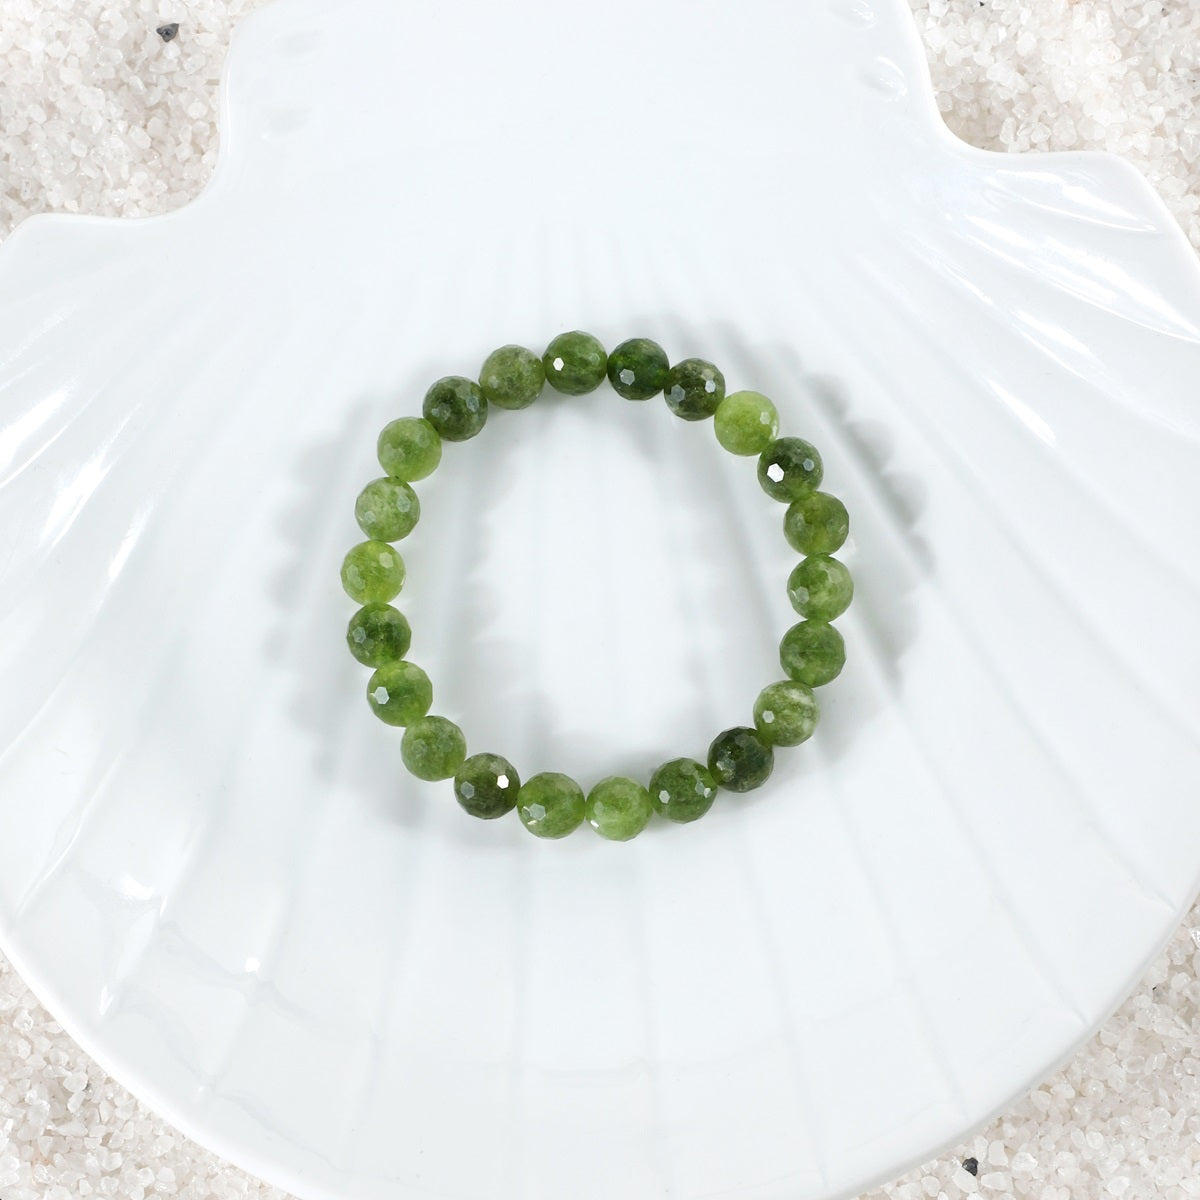 Elegant arrangement of Green Quartz Bracelet, emphasizing the beauty of the 8mm faceted stones